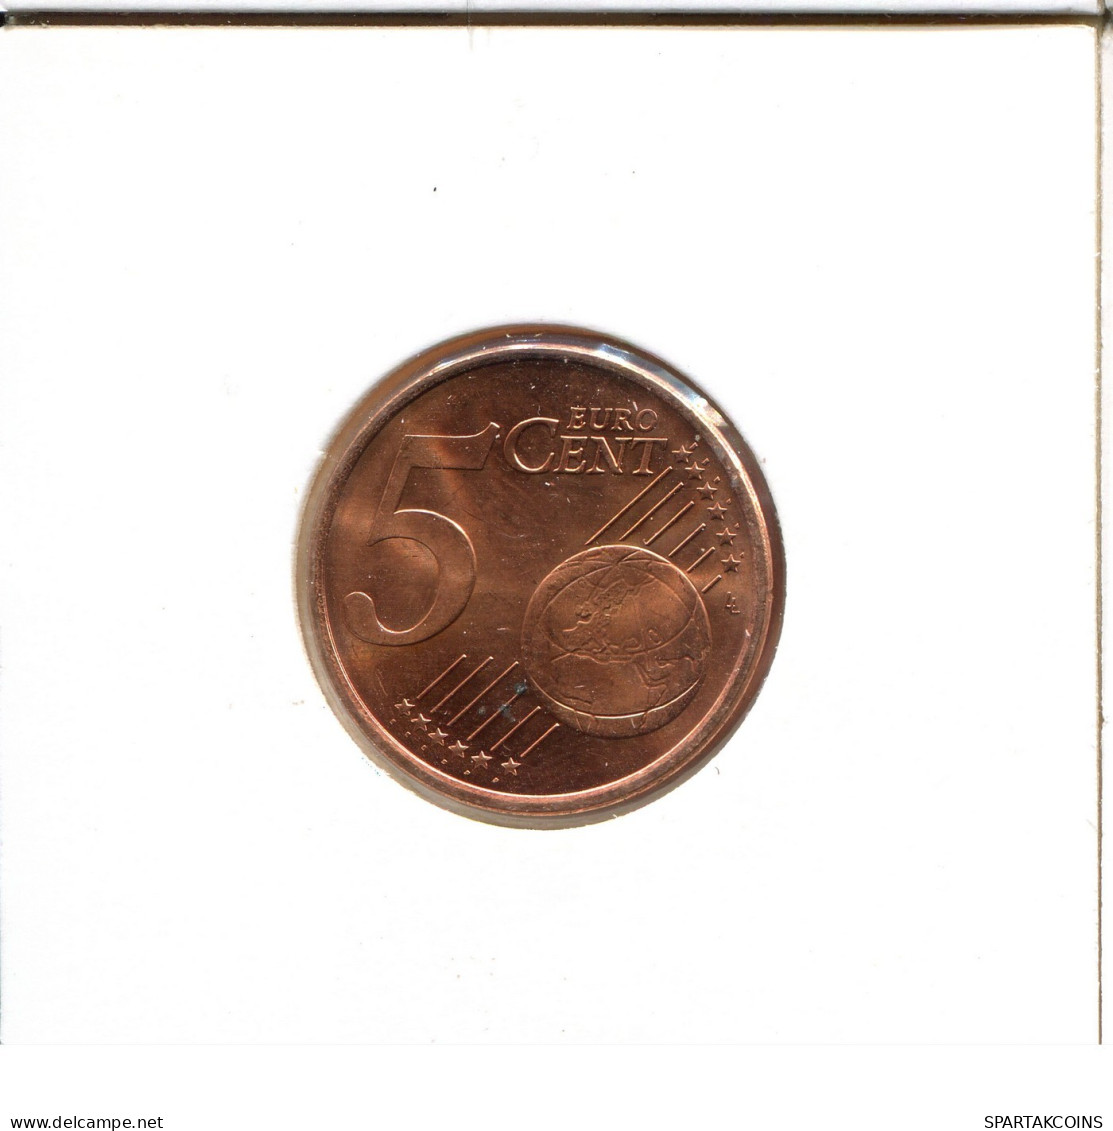 5 EURO CENTS 2006 FRANCE Coin Coin #EU463.U.A - Frankrijk